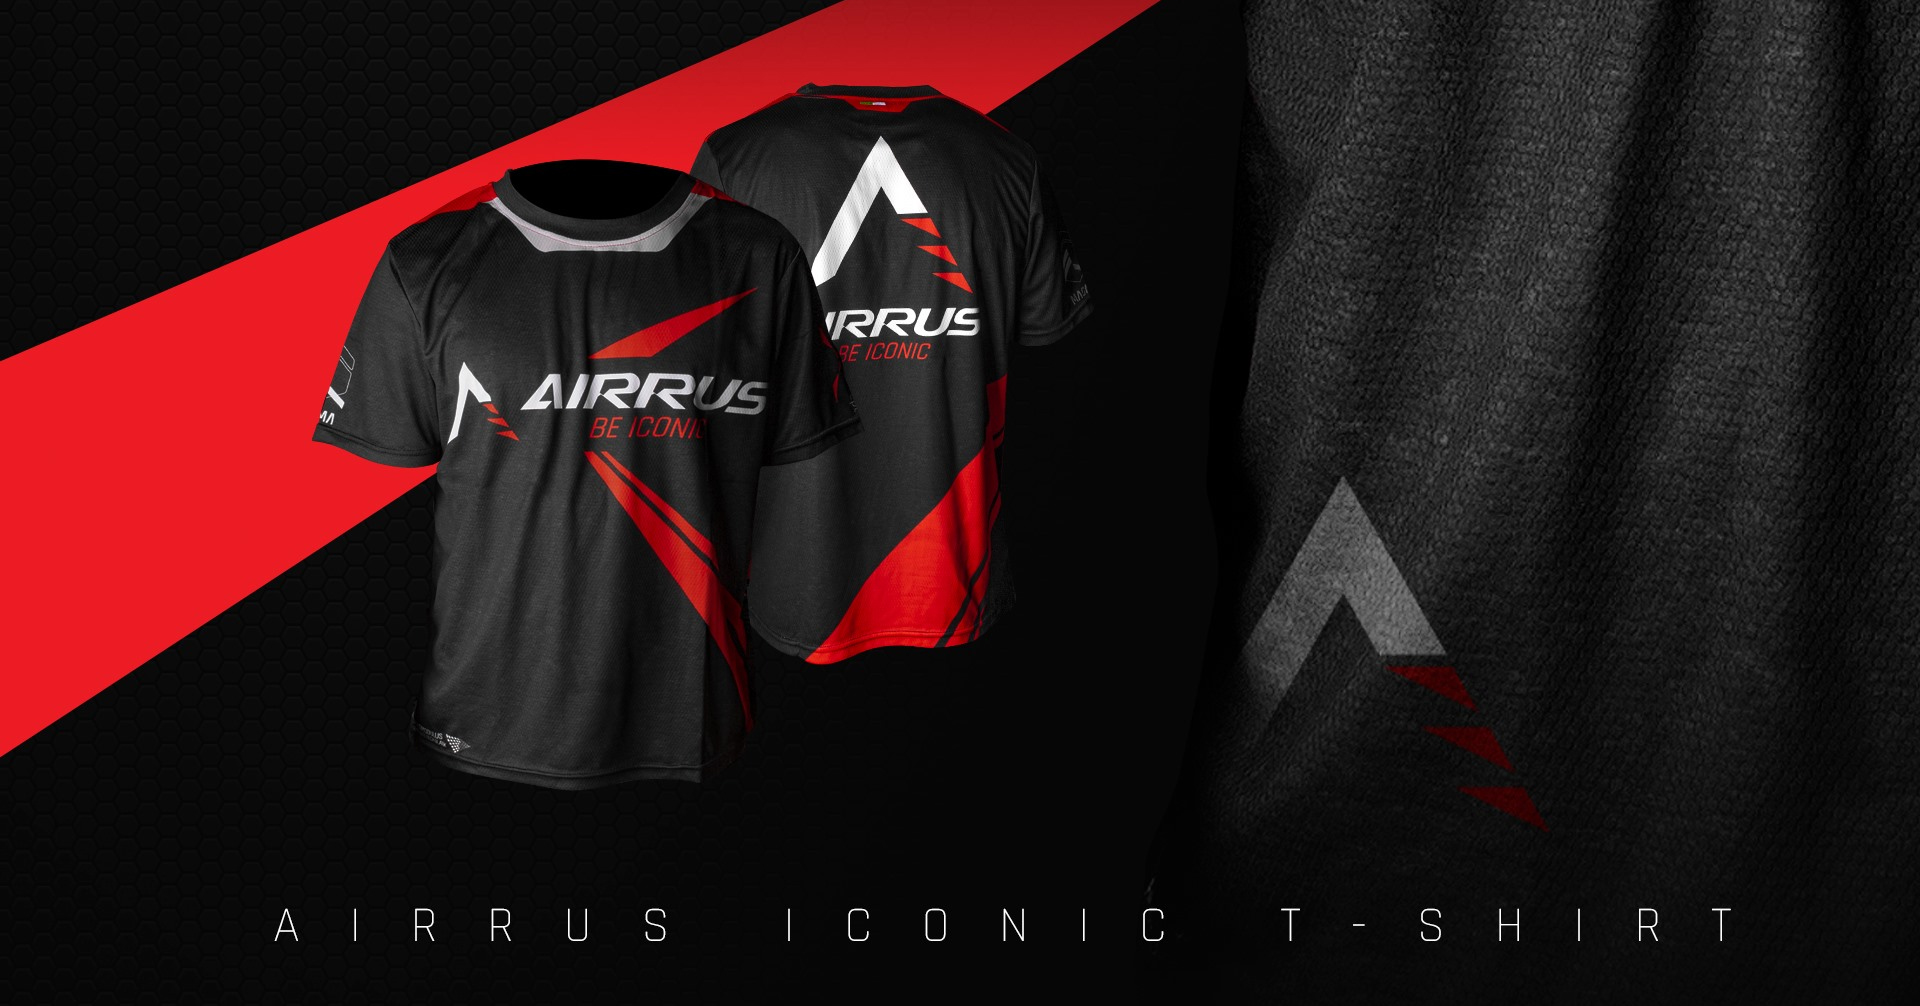 Airrus sublimated Iconic T-shirt